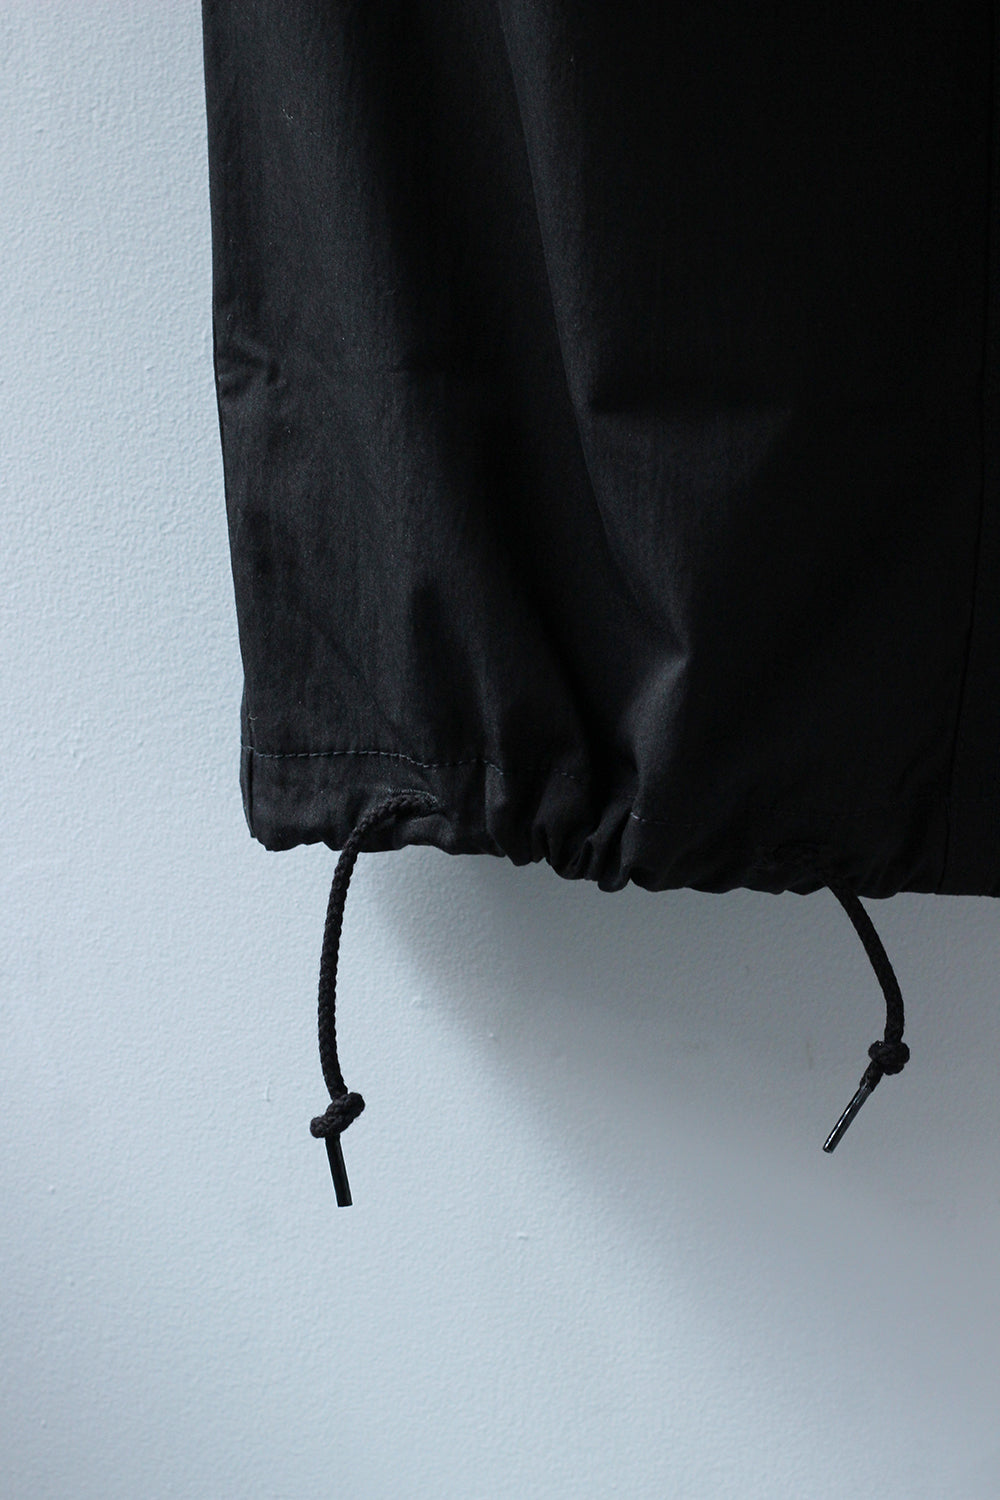 Needles "Field Pant - C/N Oxford Cloth" (black)